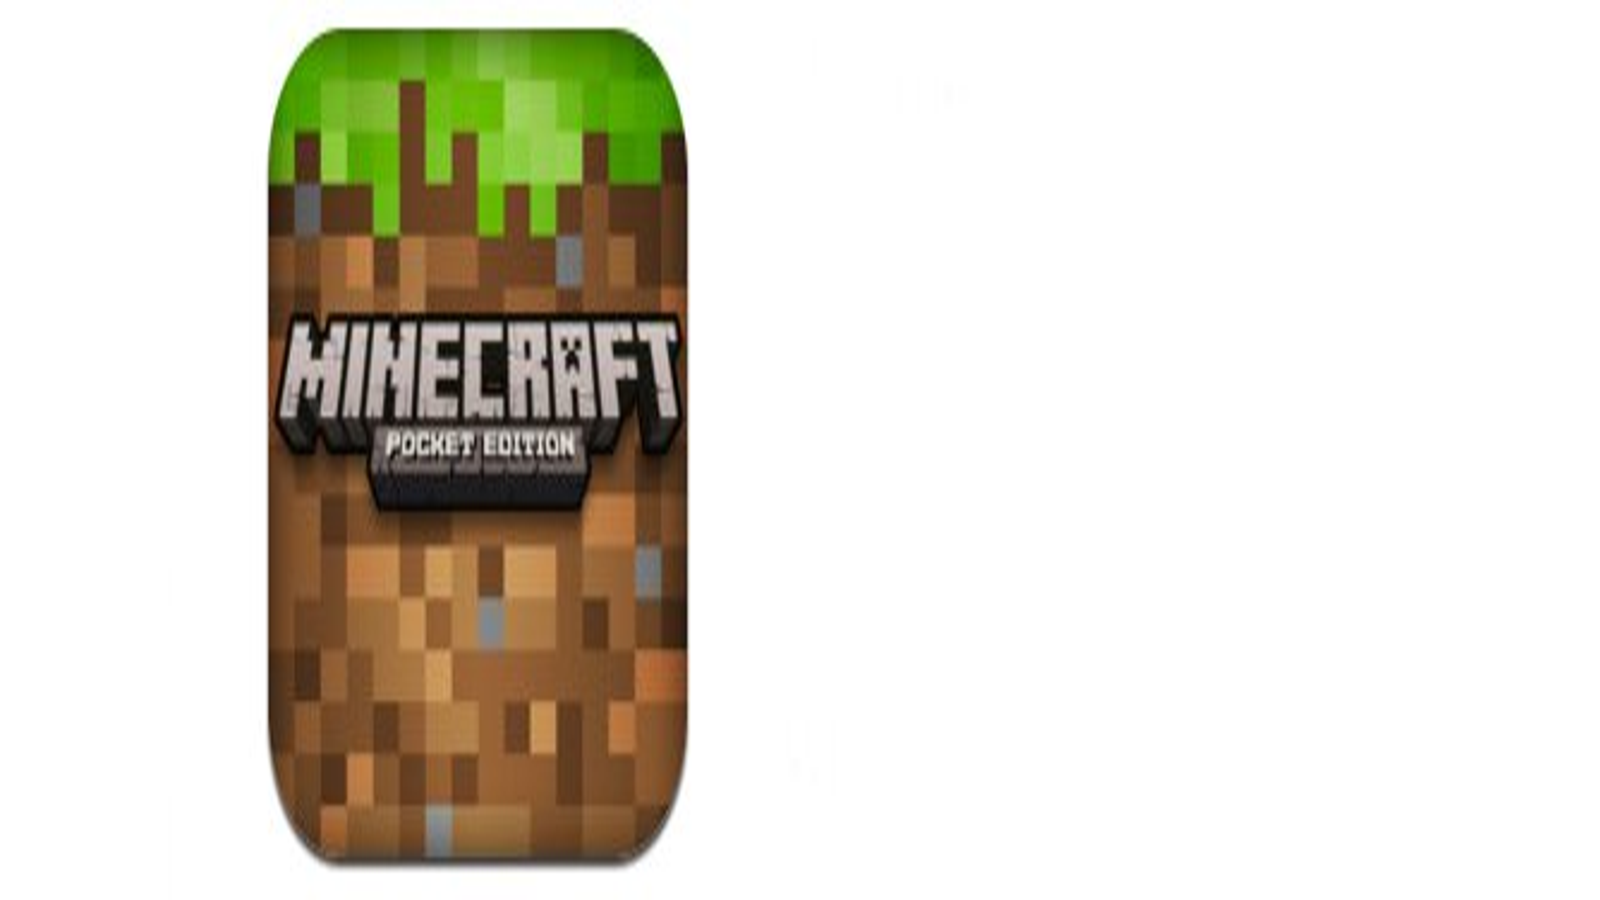 Minecraft Pocket Edition App for iPad